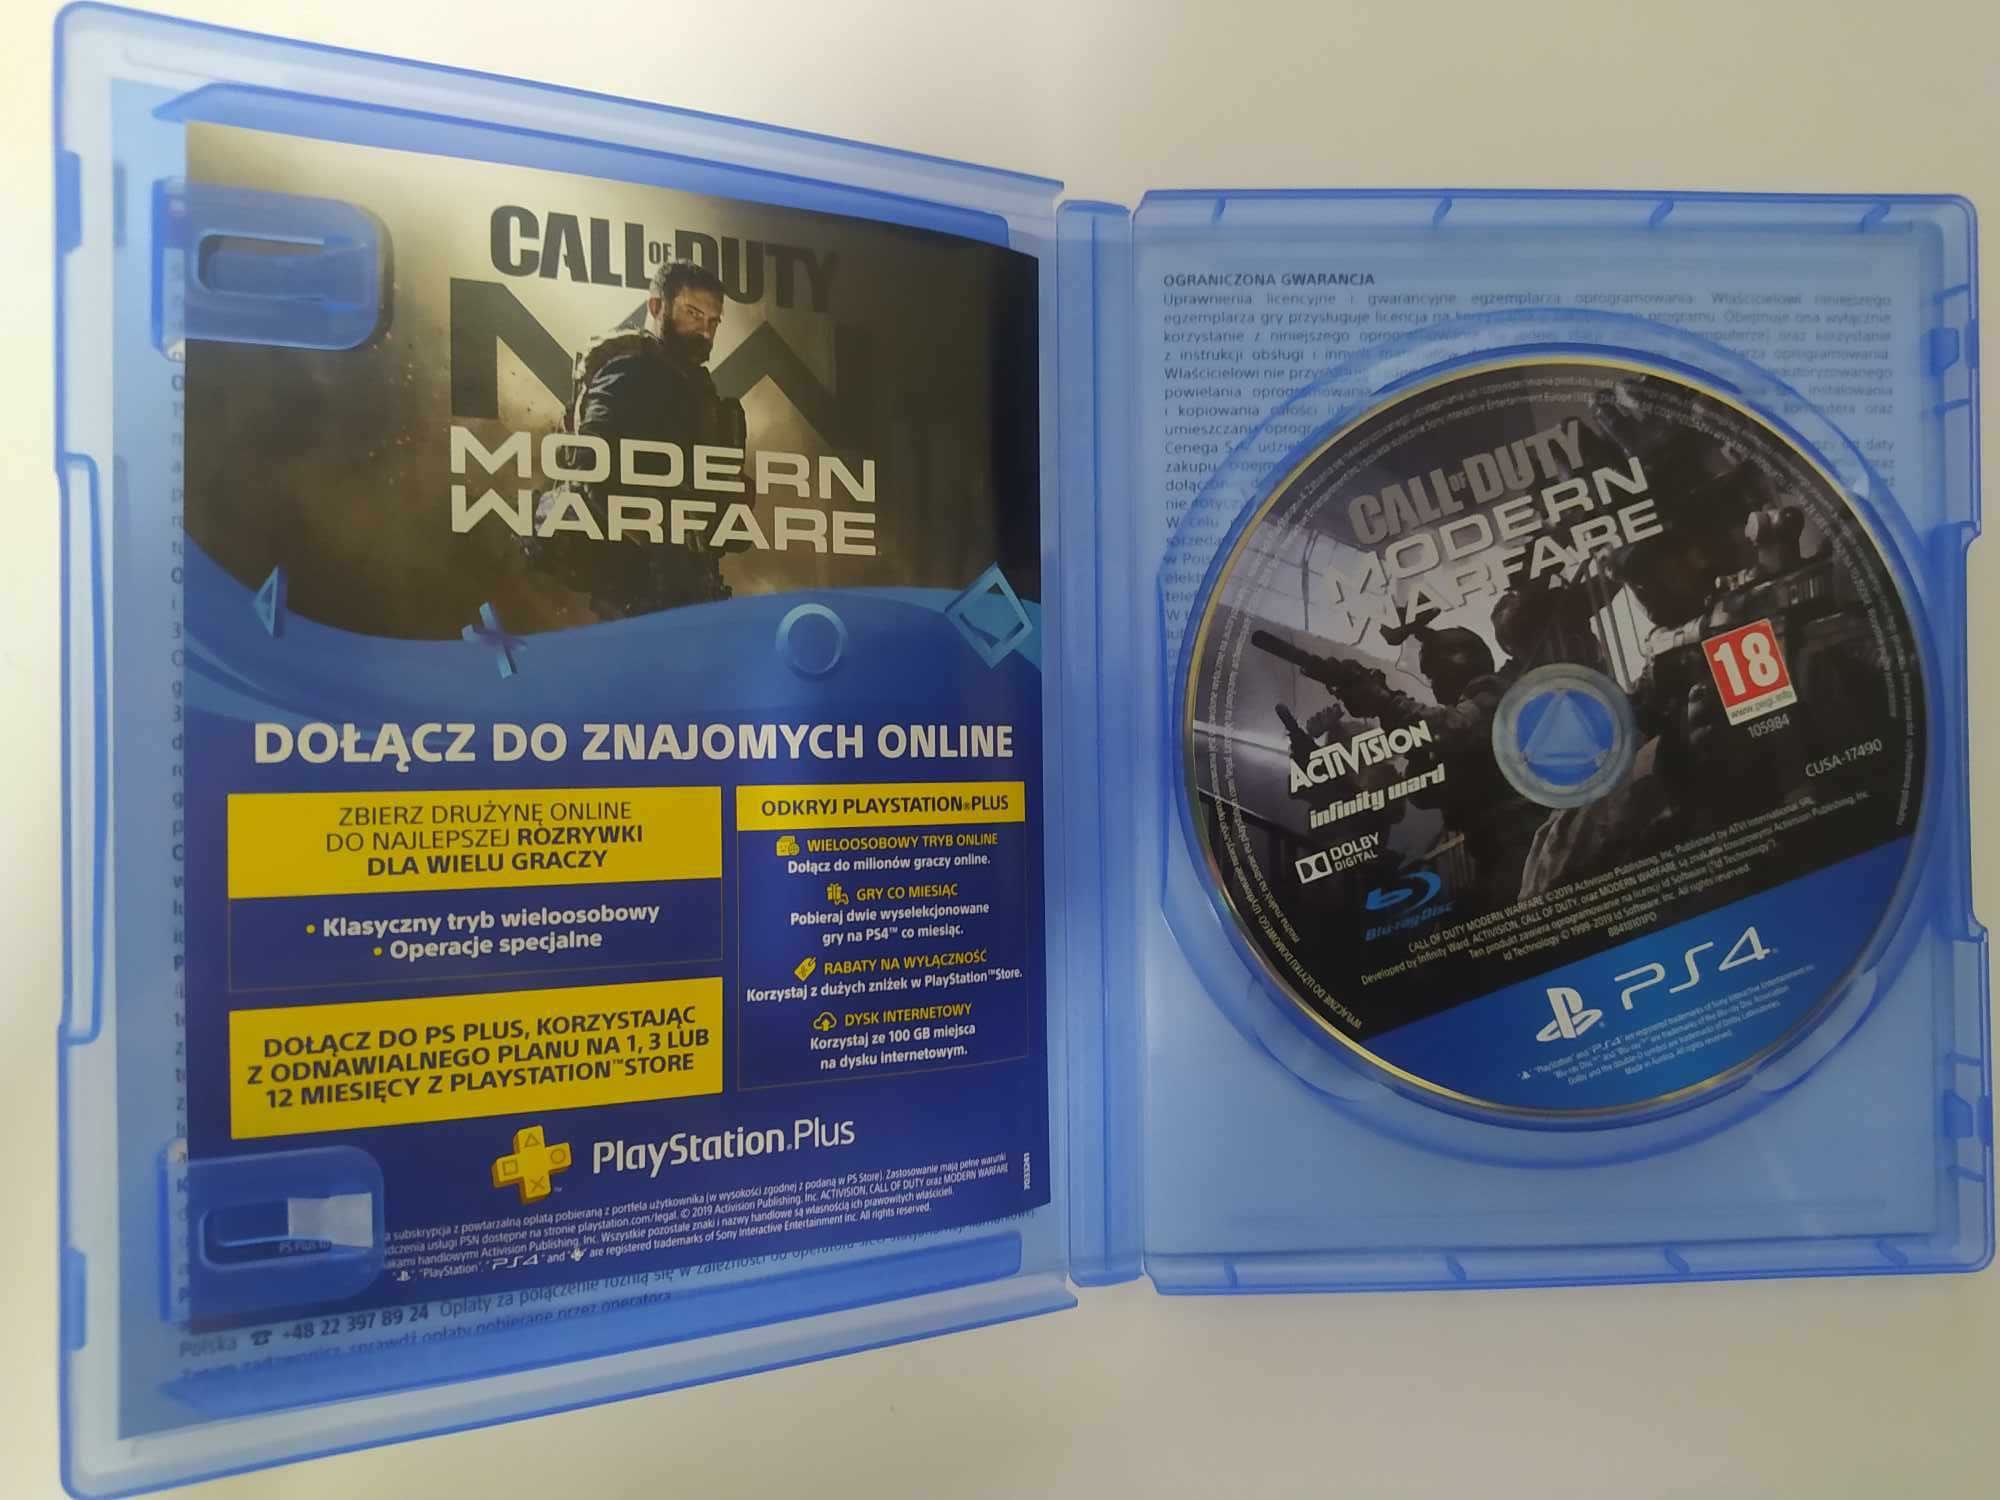 Call of Duty: Modern Warfare PS4 Polski dubbing w grze